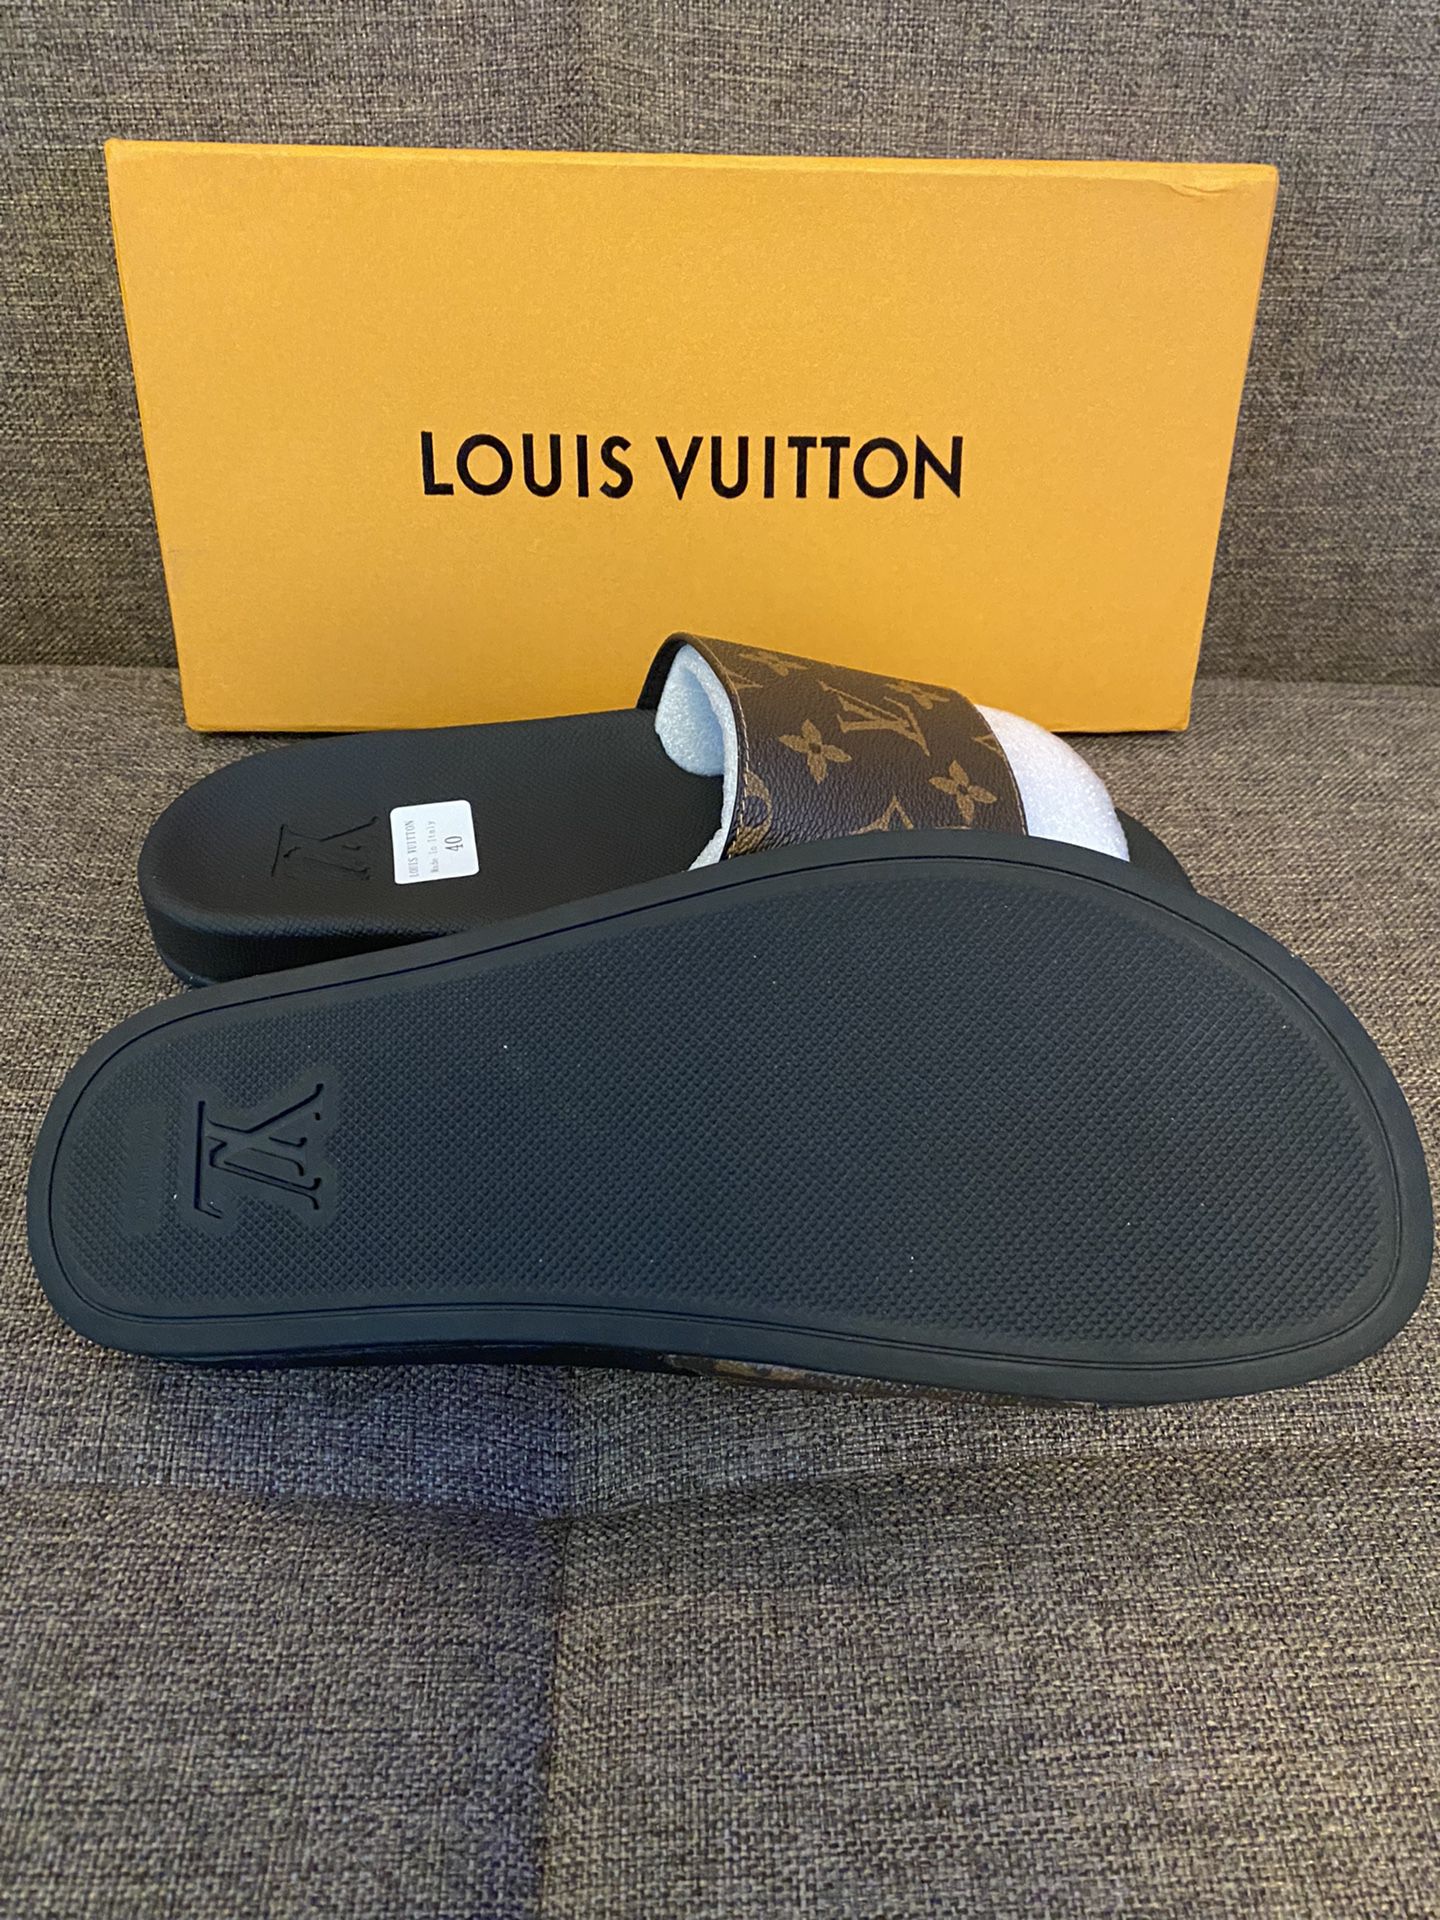 Louis Vuitton Men's Waterfront Mule for Sale in Dallas, TX - OfferUp